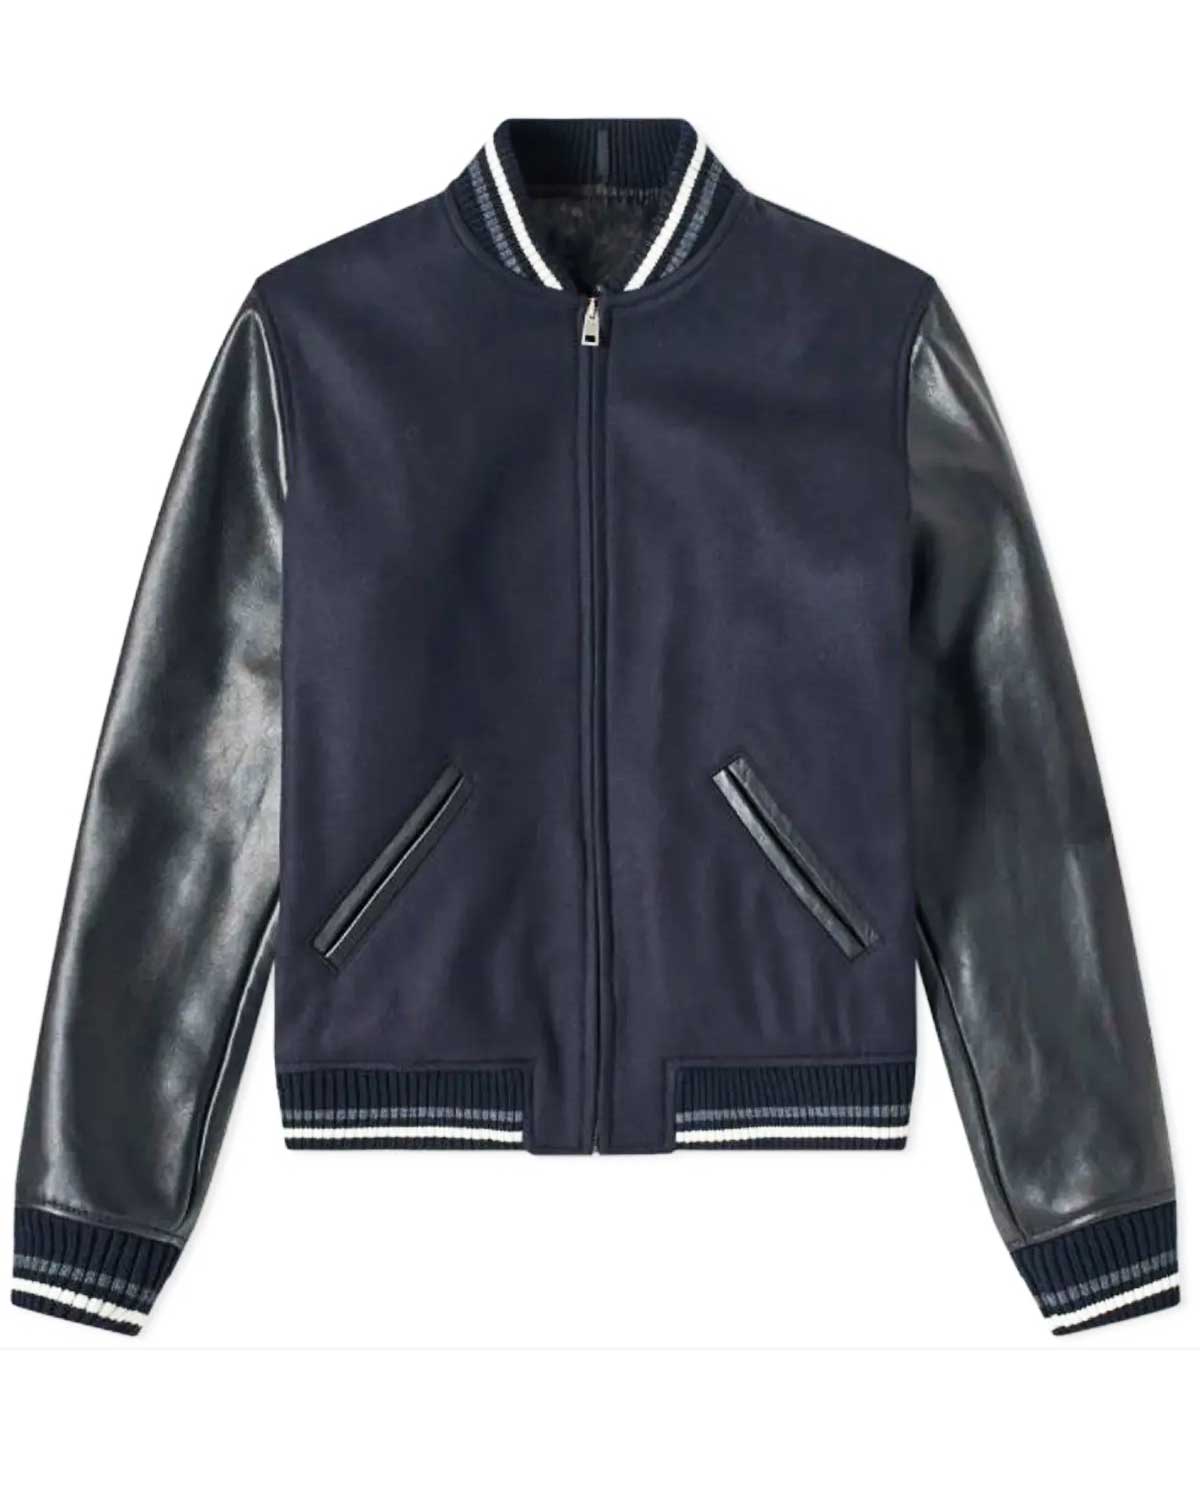 APC Blouson Blue And Black Copper Varsity Jacket | Elite Jacket